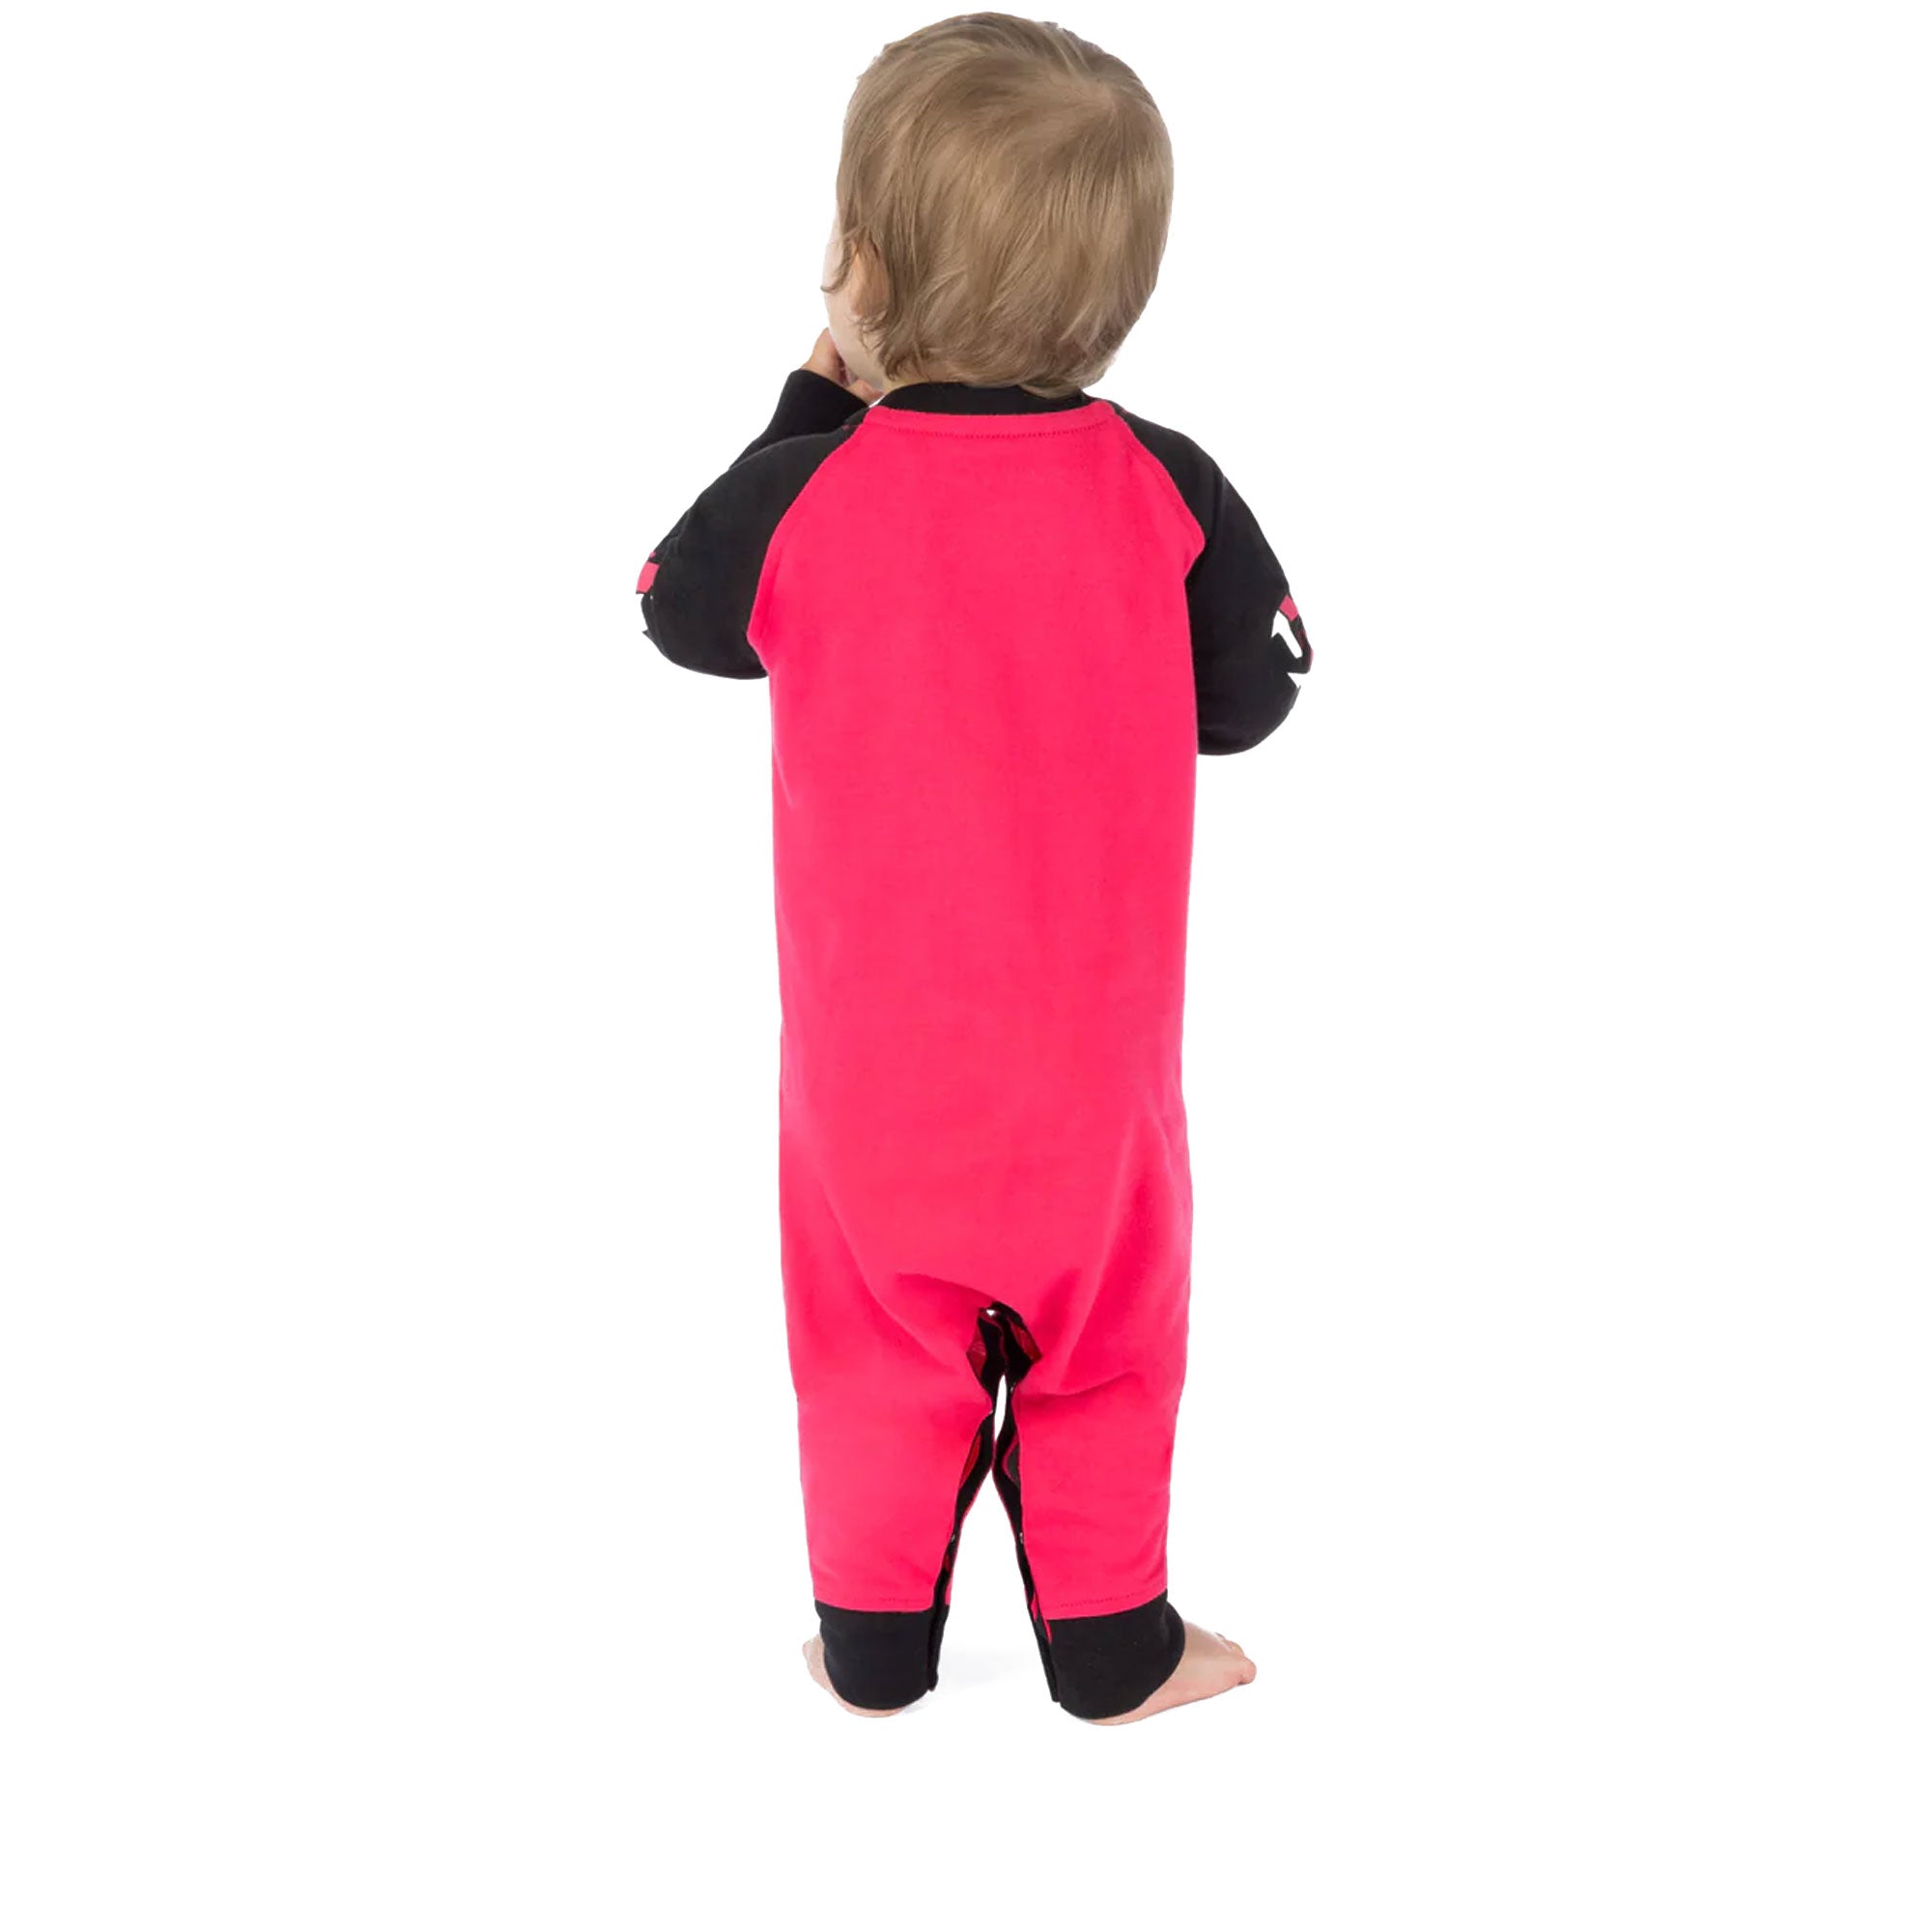 FXR Infant Race Division Bodysuit